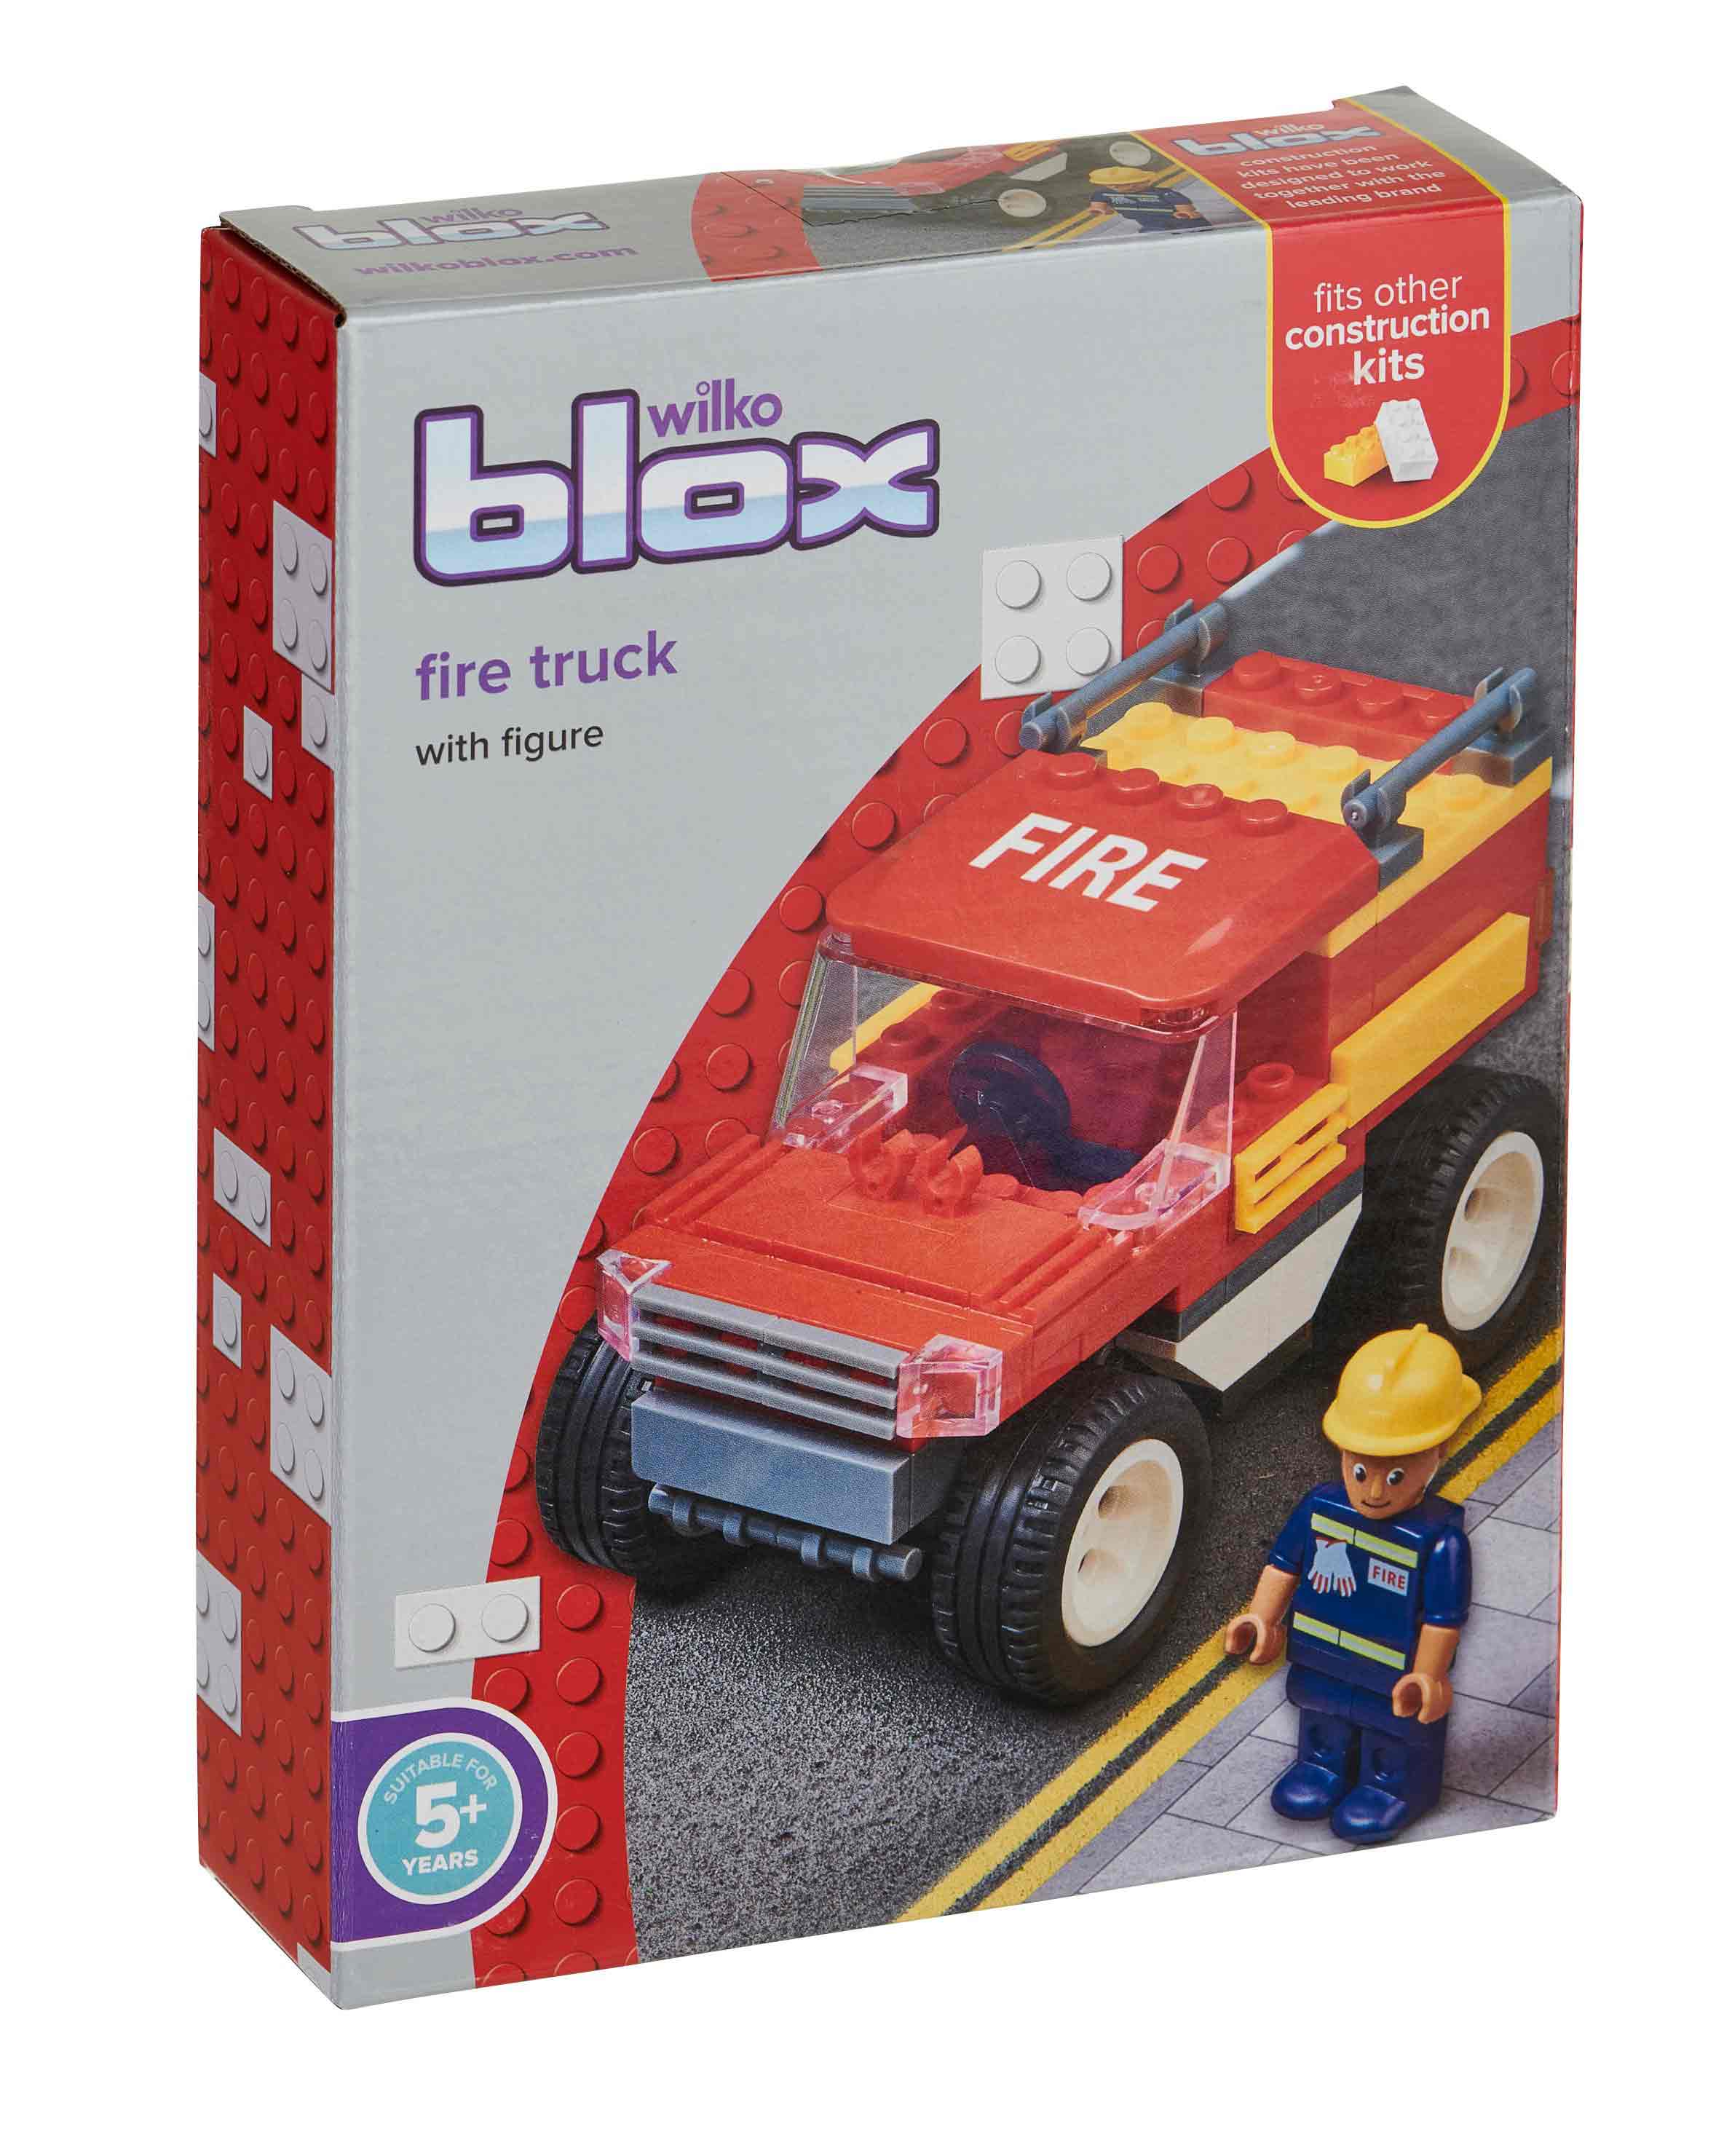 Wilko Blox Fire Truck Small Set Image 3